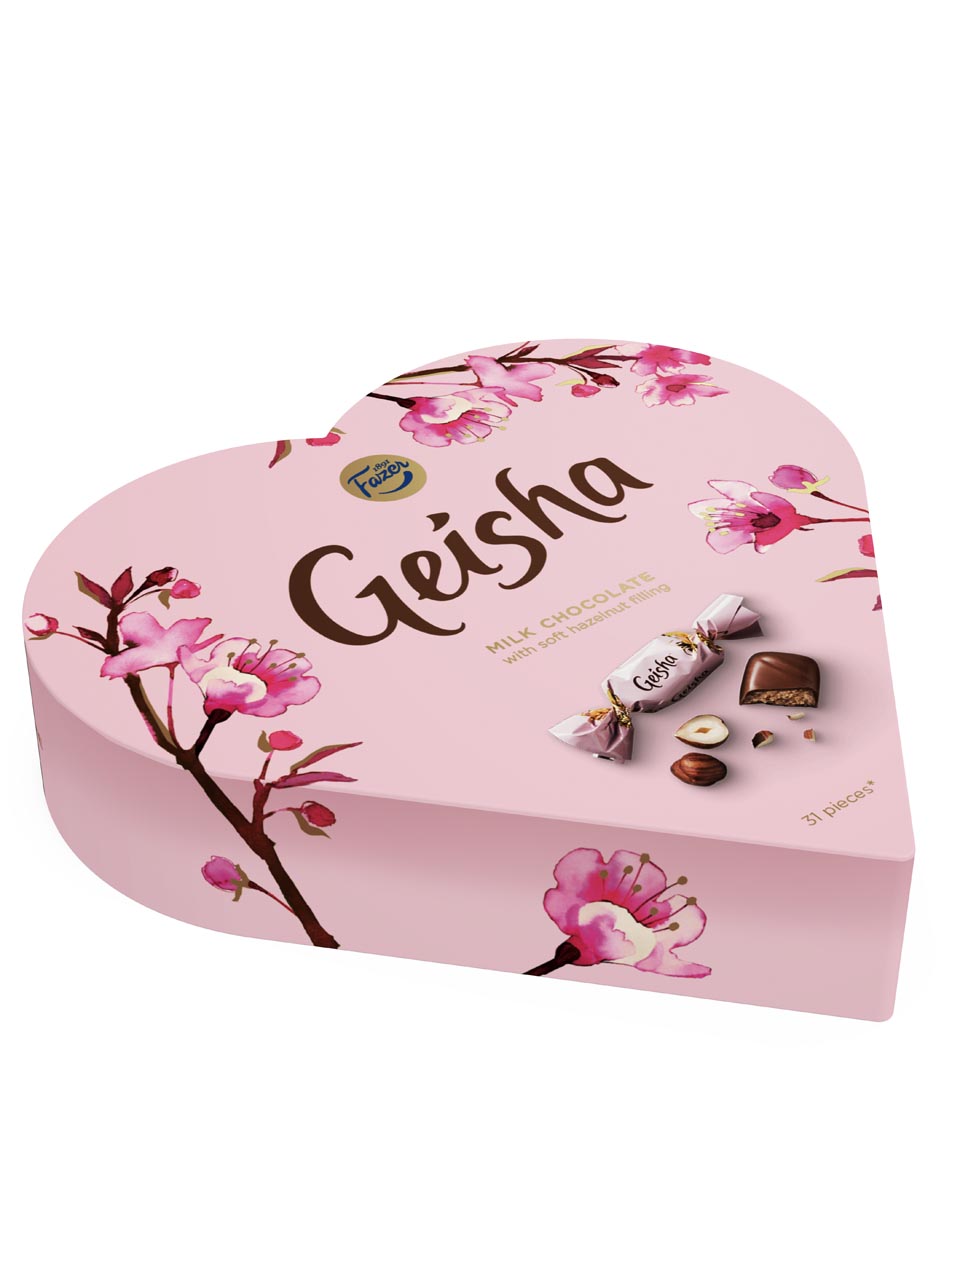 Geisha Heart 225g null - onesize - 1